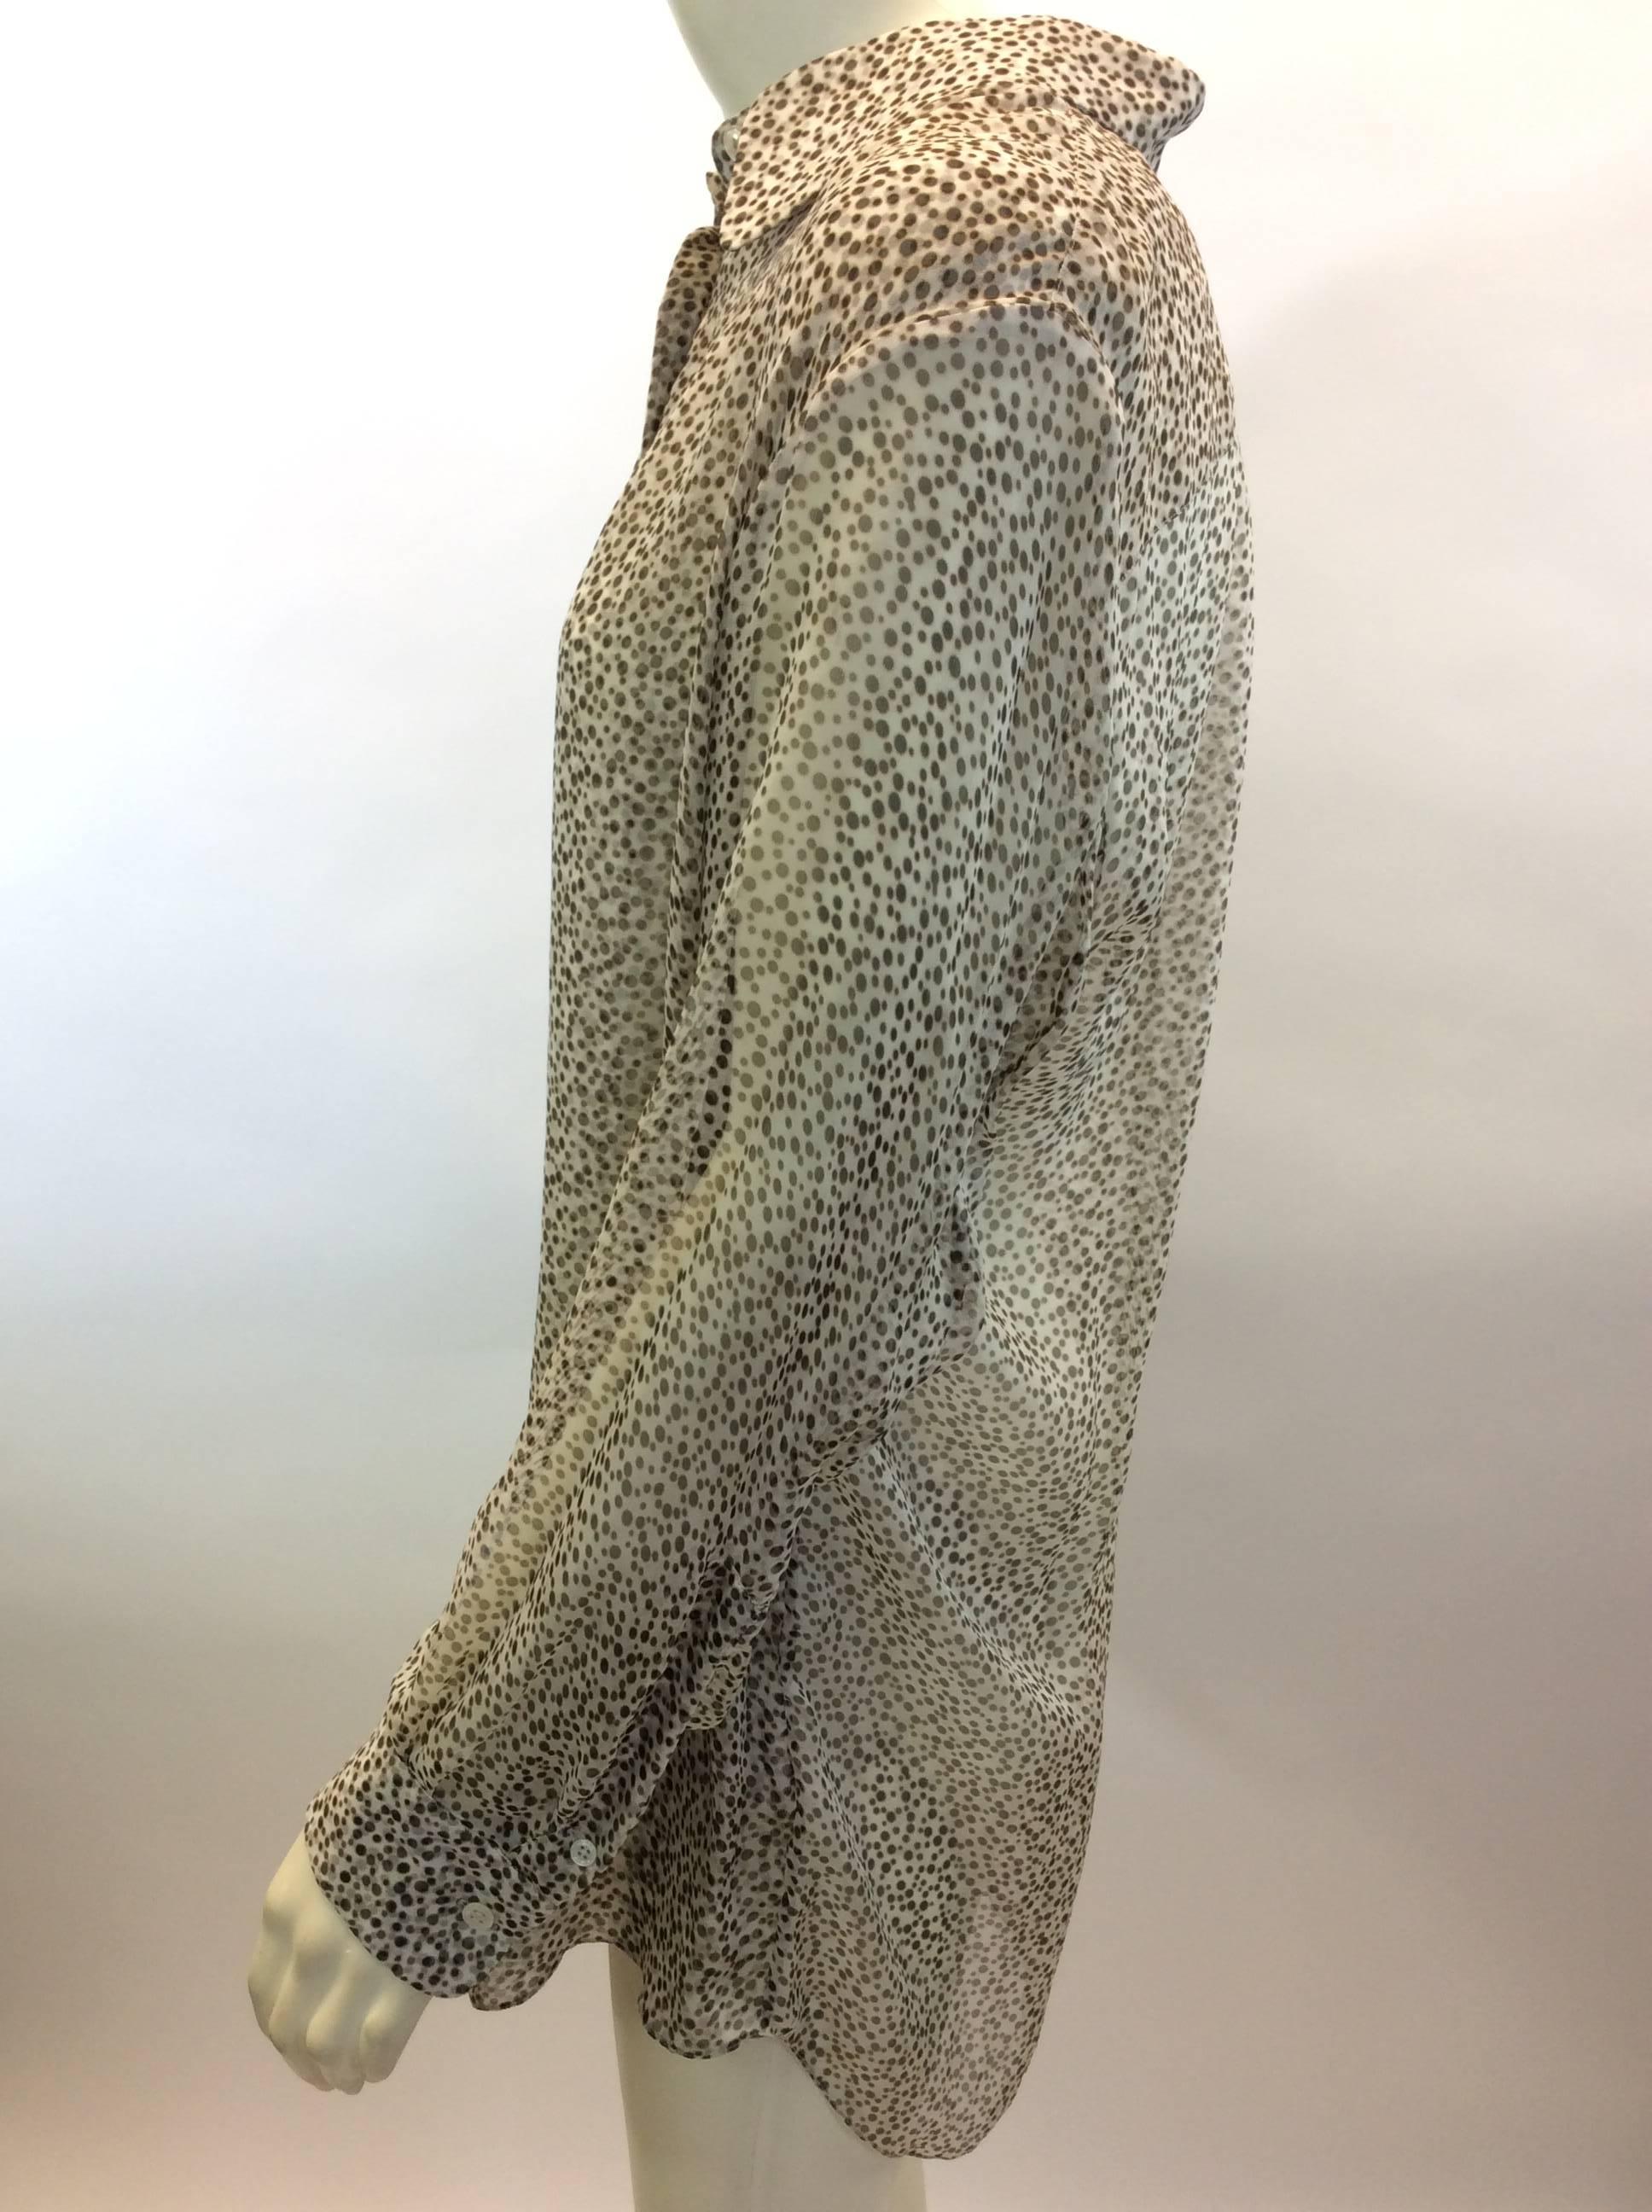 Yves Saint Laurent NWT Silk Print Blouse
100% Silk
Made in Italy
$685
Size 38
Length 31